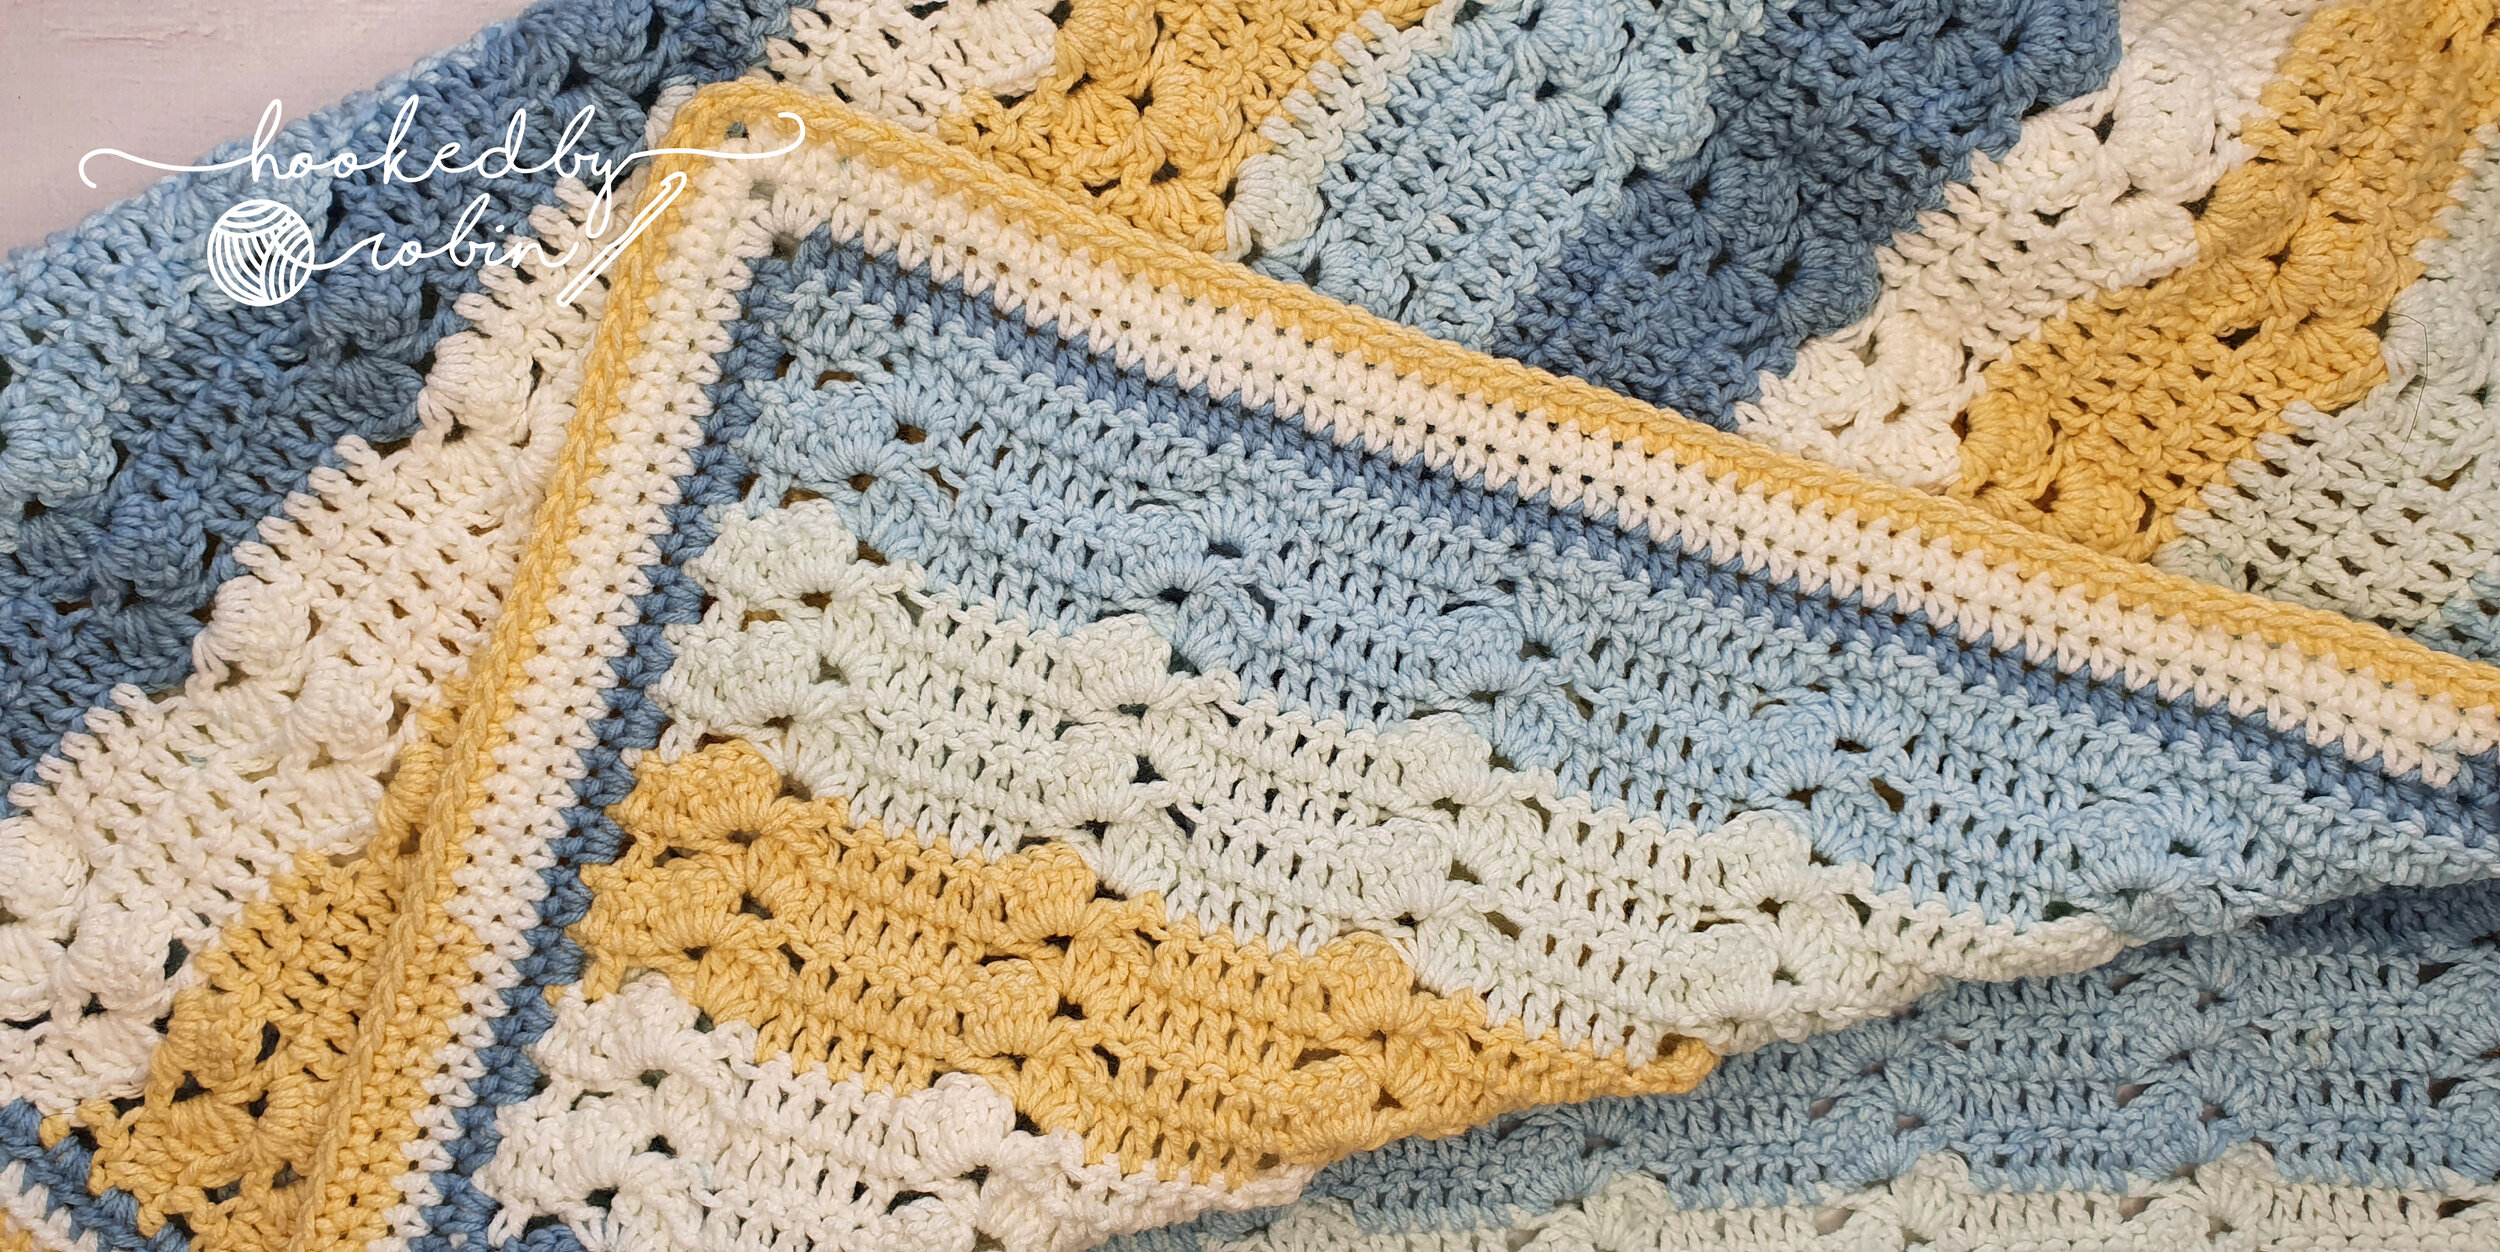 30+ Free Caron Cakes Crochet Patterns